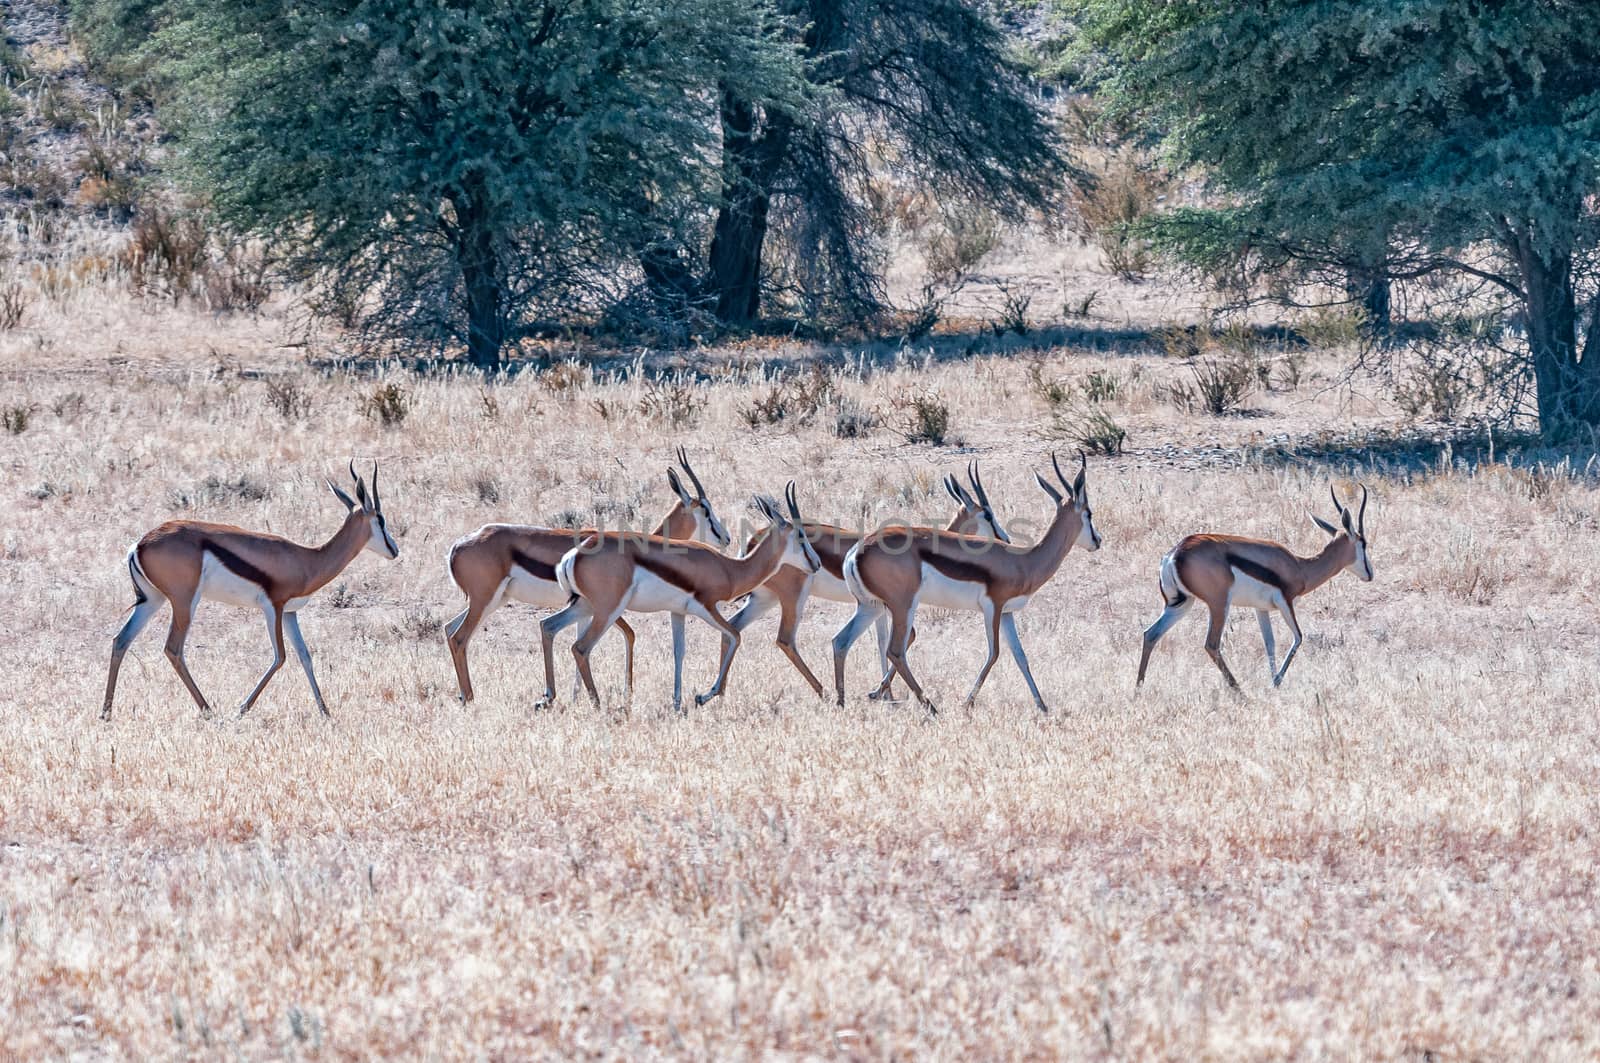 A herd of springbok walking in the arid Kgalagadi